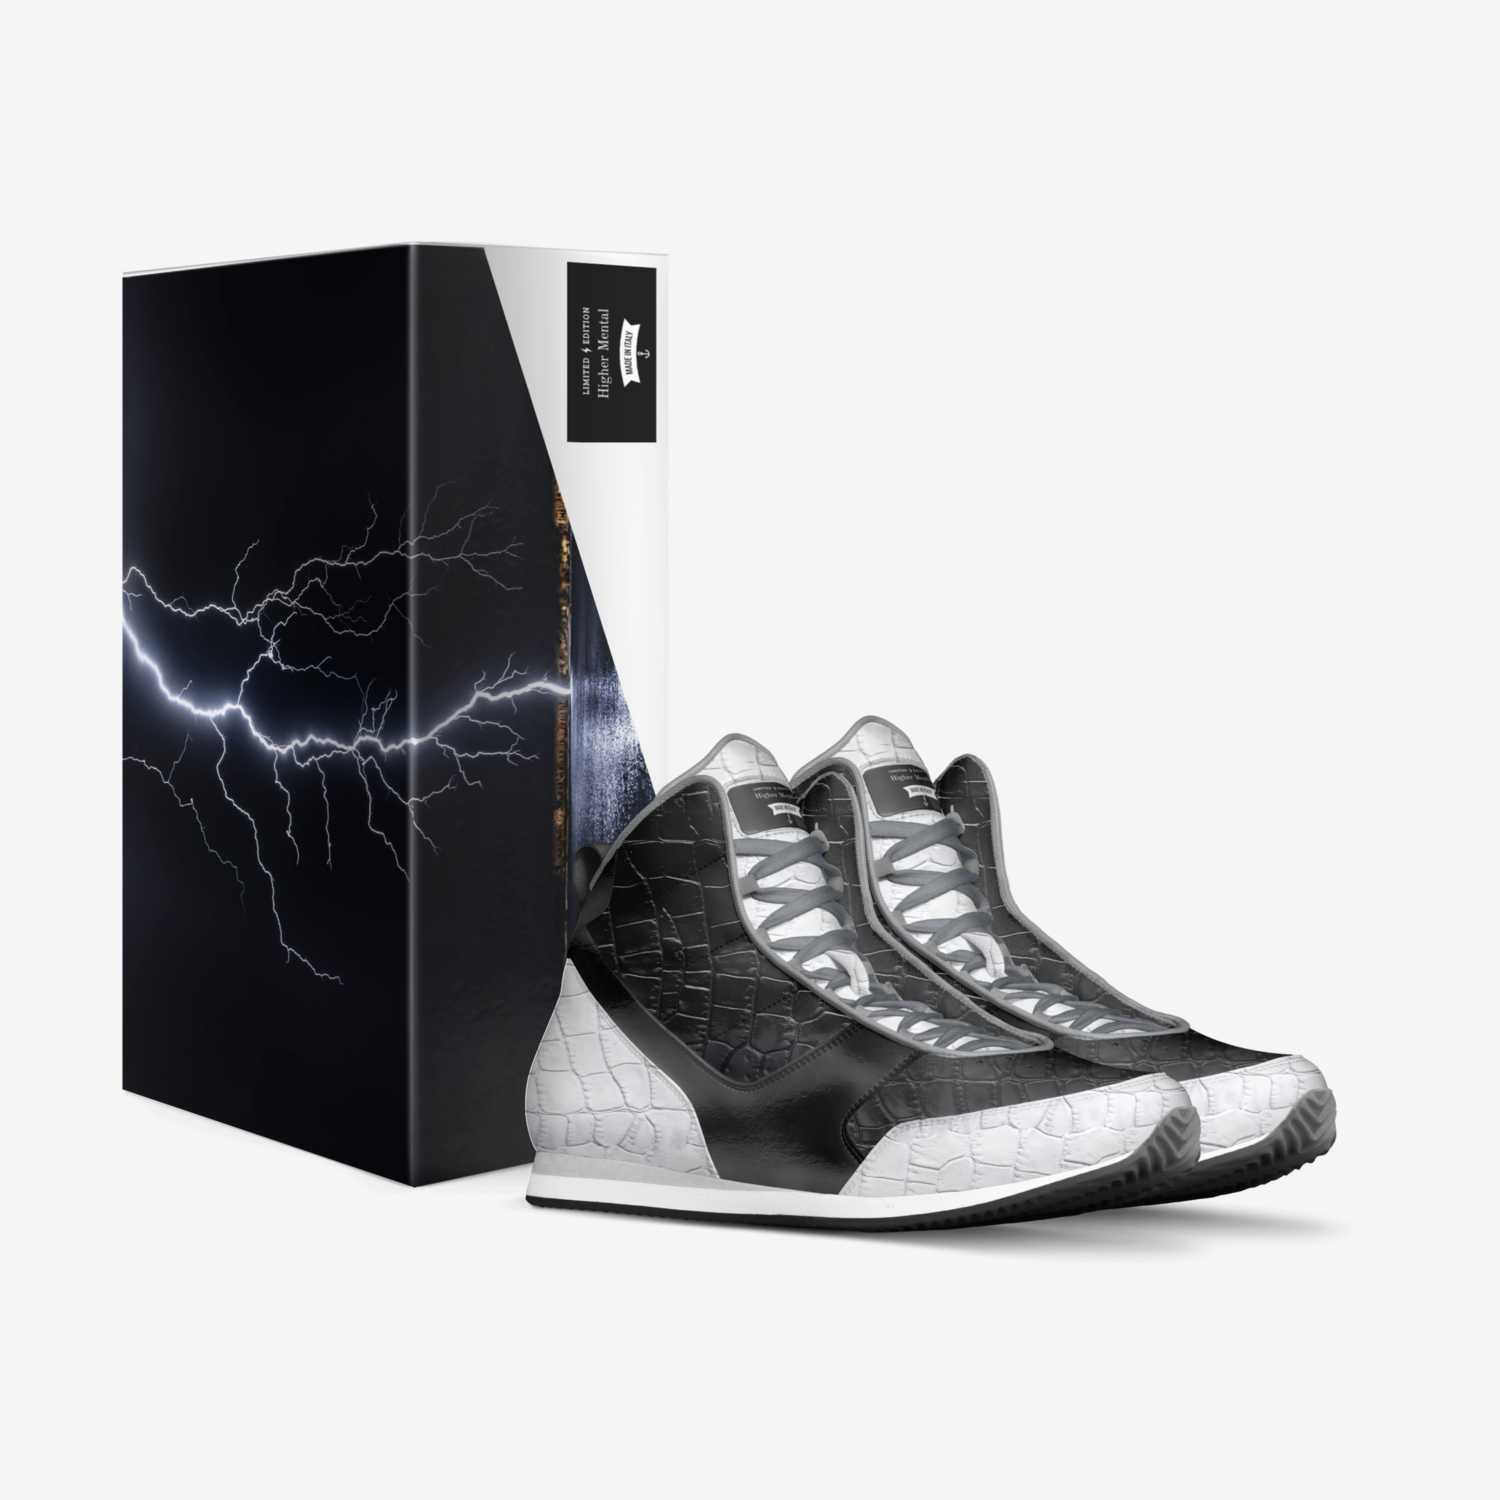 Higher Mental custom made in Italy shoes by Jayja Washington | Box view